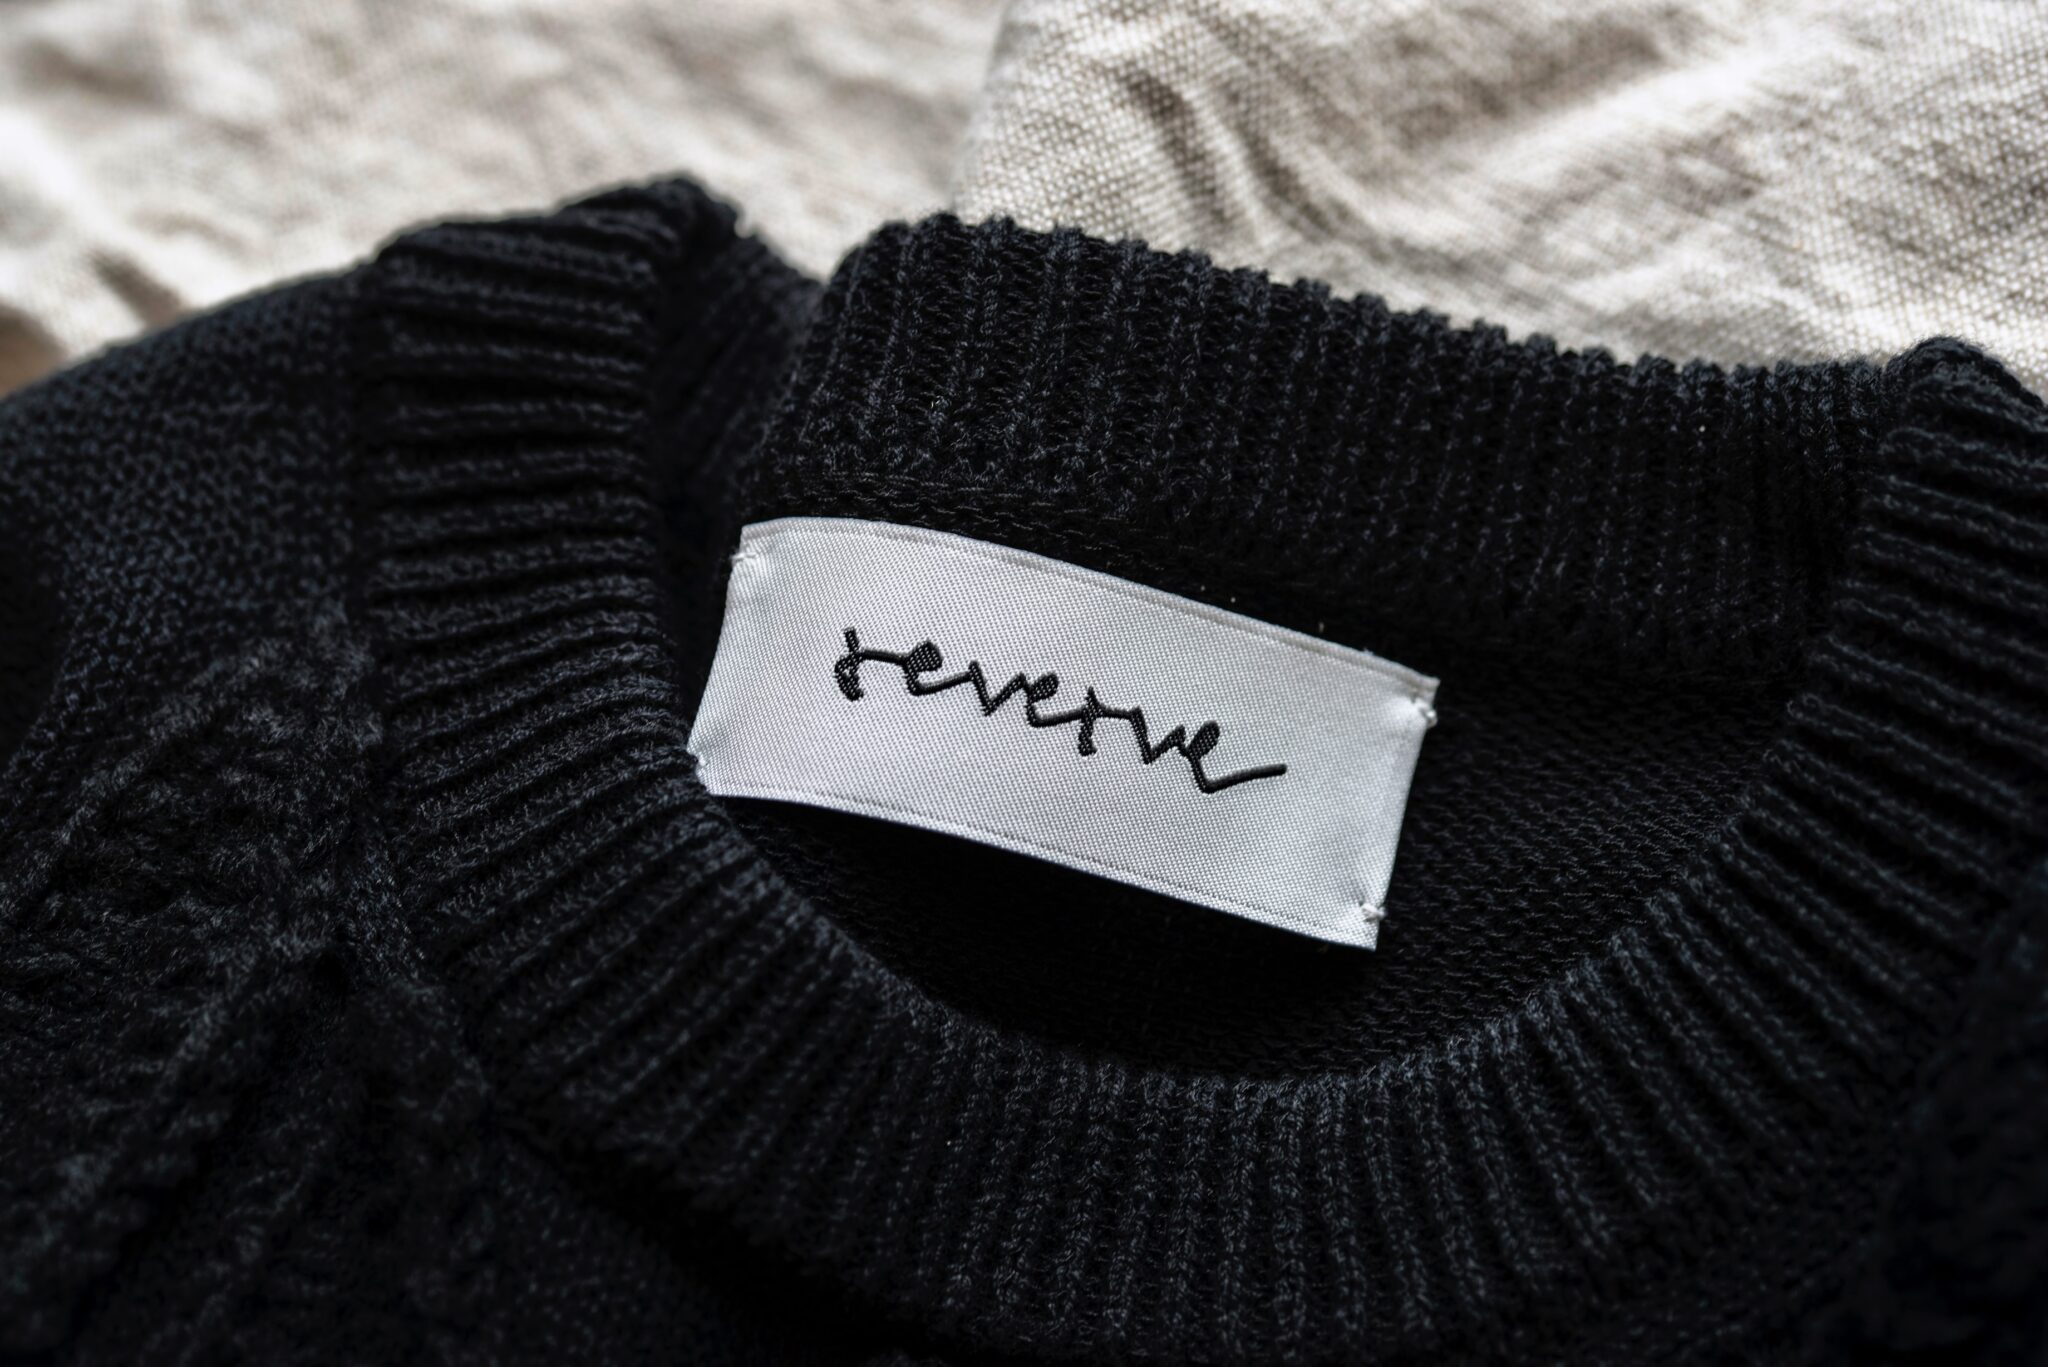 Photo: brand name tag of reverve